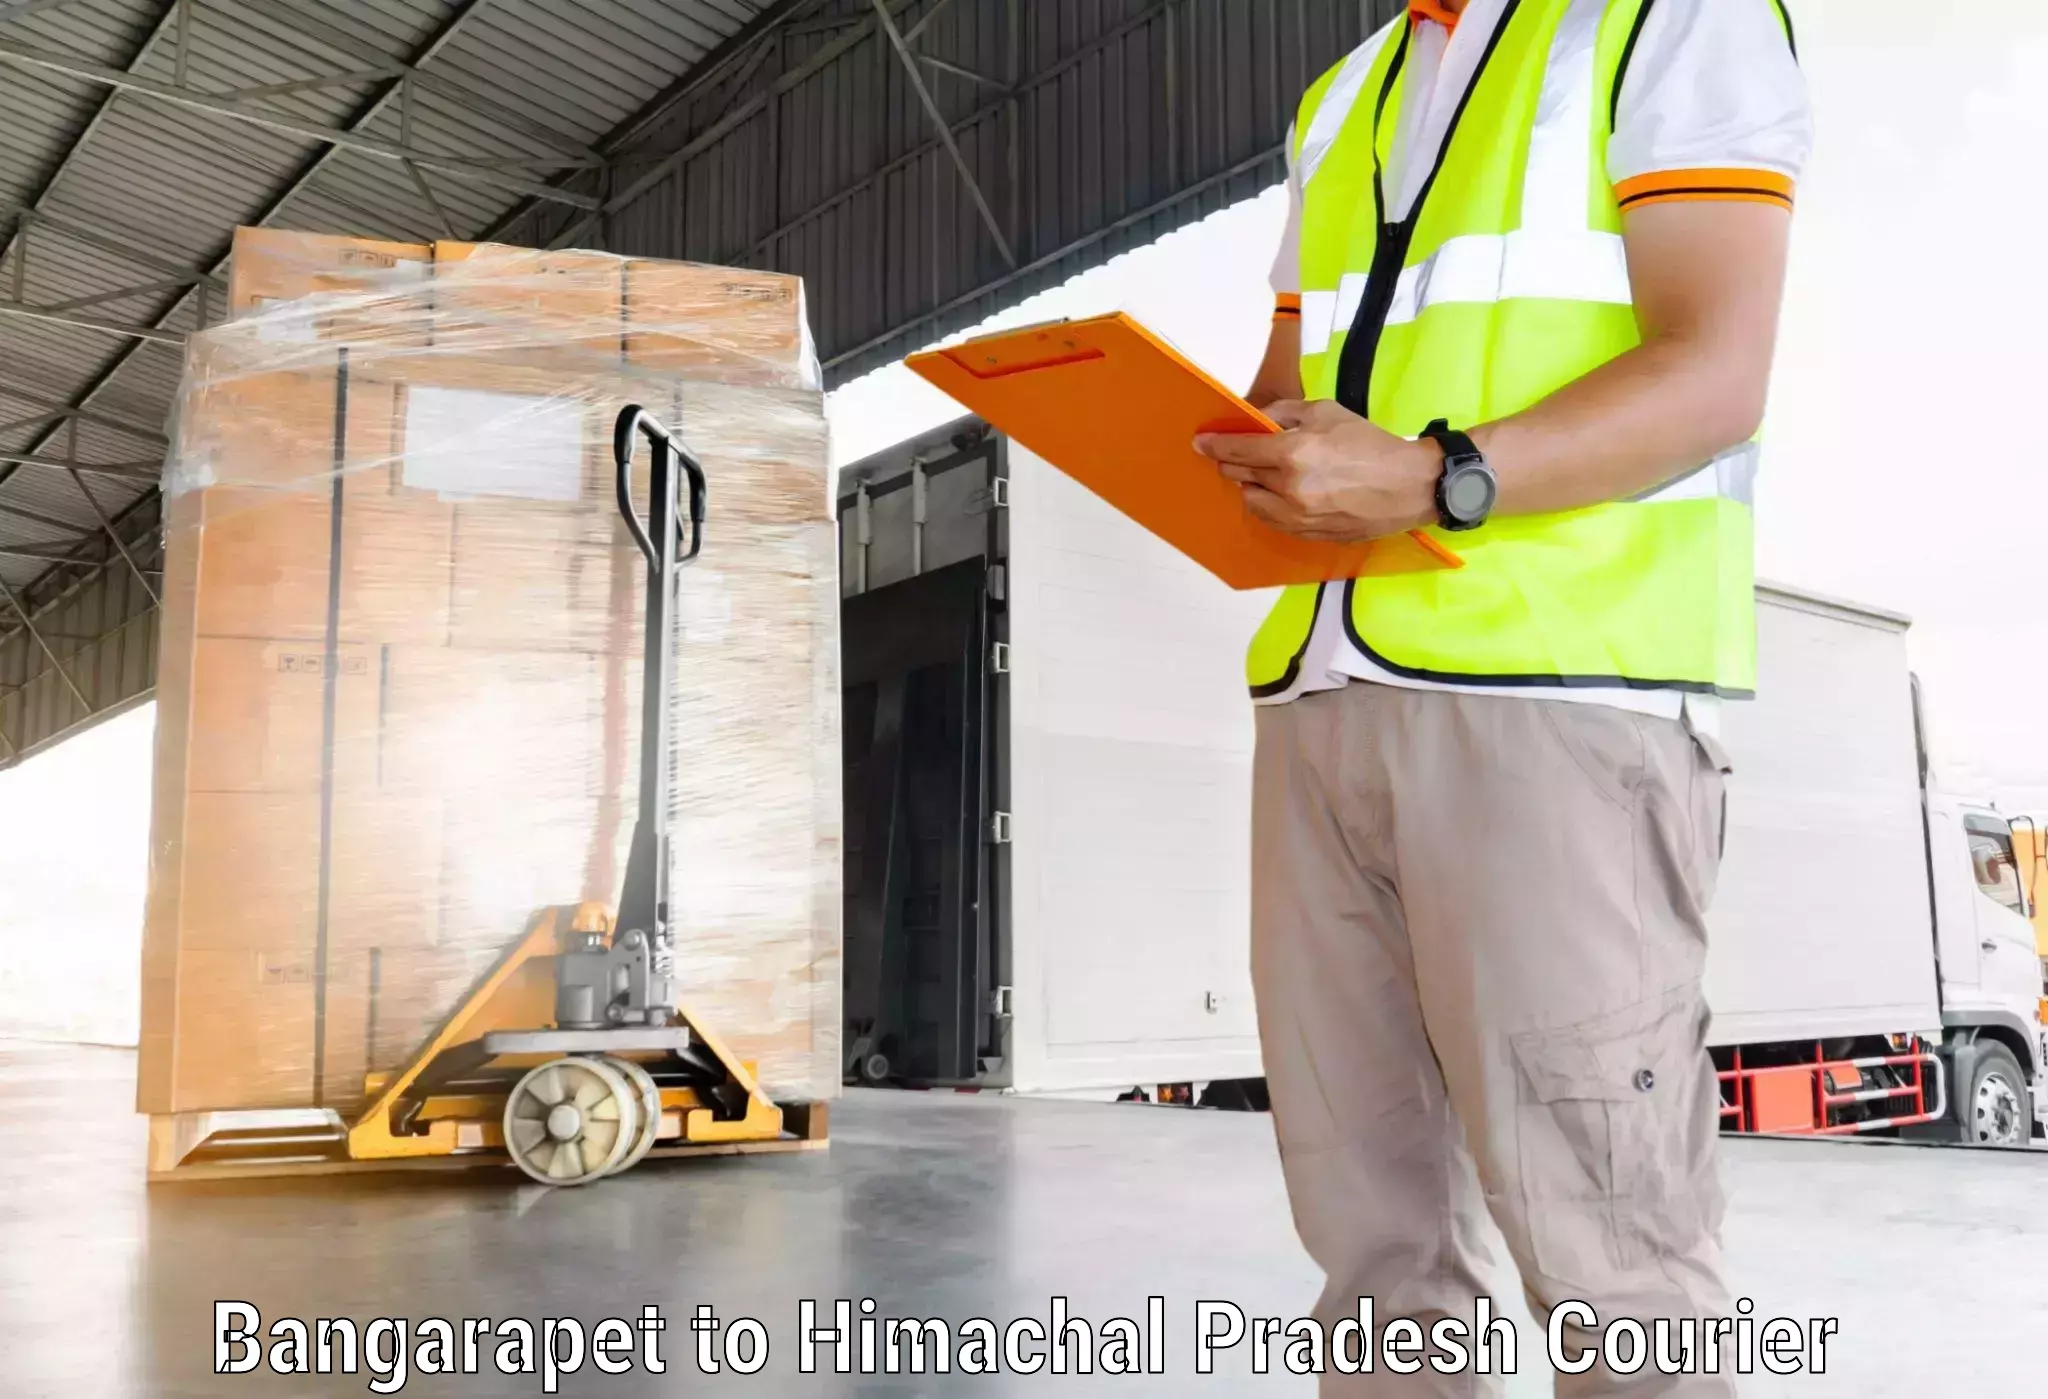 Flexible delivery scheduling Bangarapet to Banjar